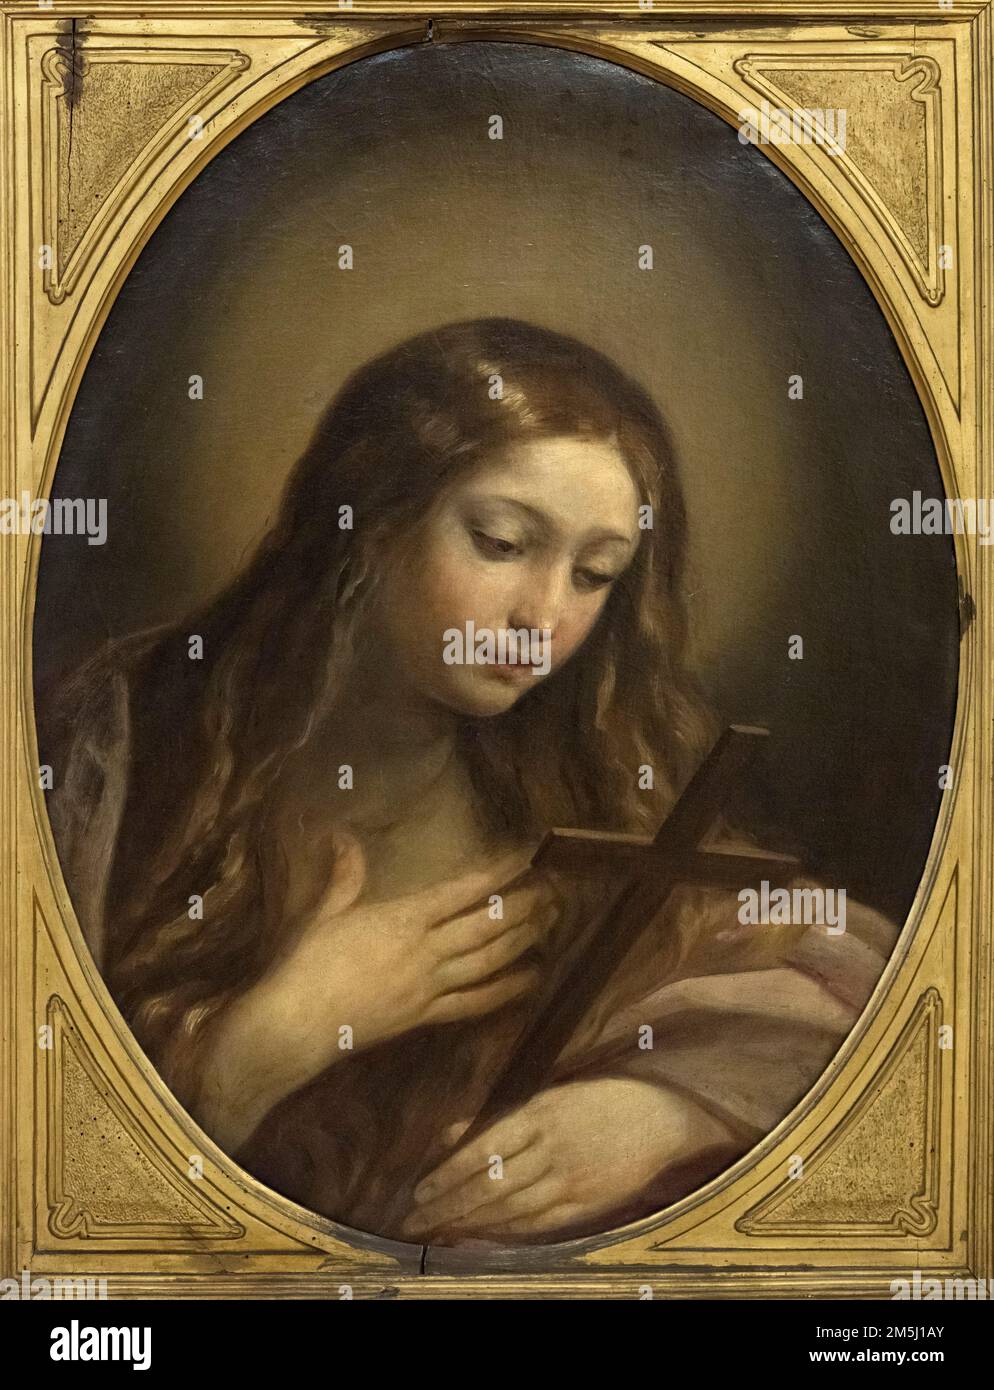 Guido Reni (1575-1642), Penitent Magdalene, Ca. 1635-1640. Maddalena penitente. Kapitolinische Museen, Rom, Italien. Öl auf Segeltuch. H 77,5 x 59 cm Inv. Stockfoto